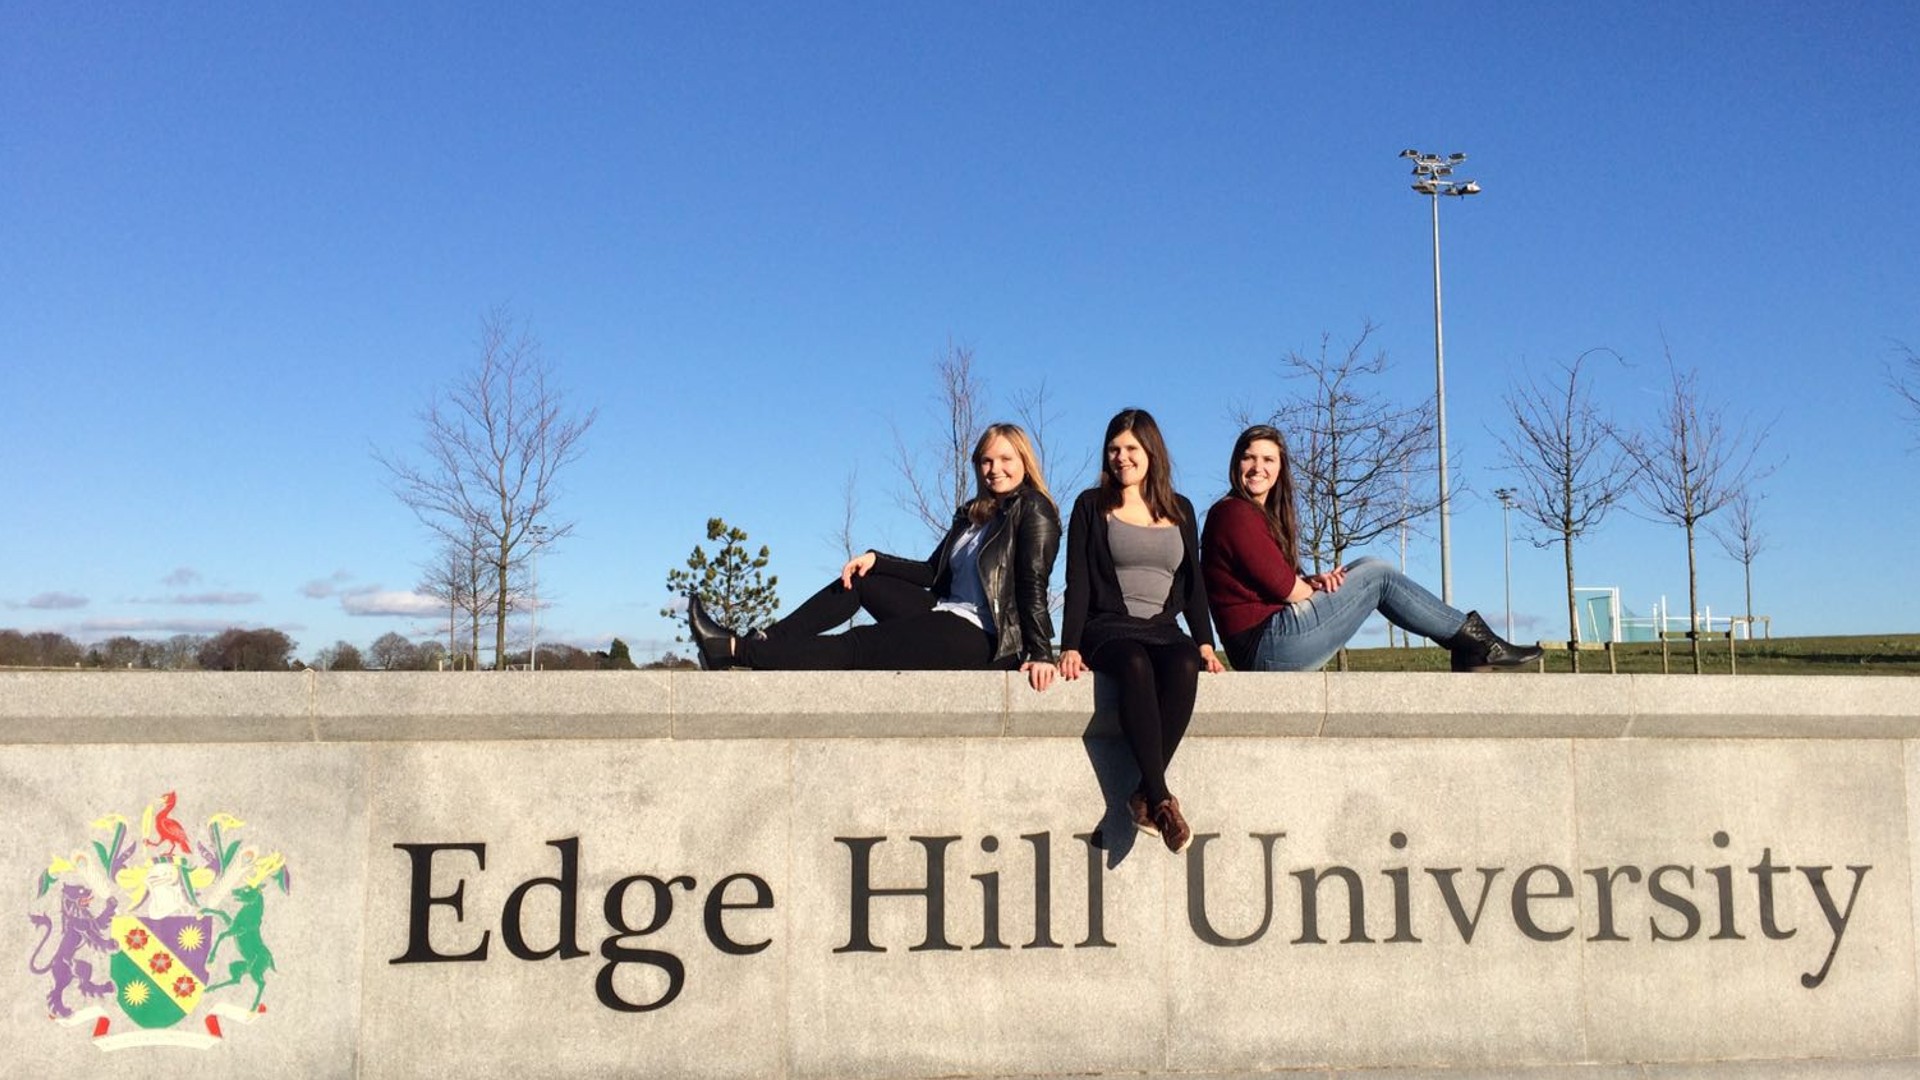 Three students sat on the Edge Hill University sign